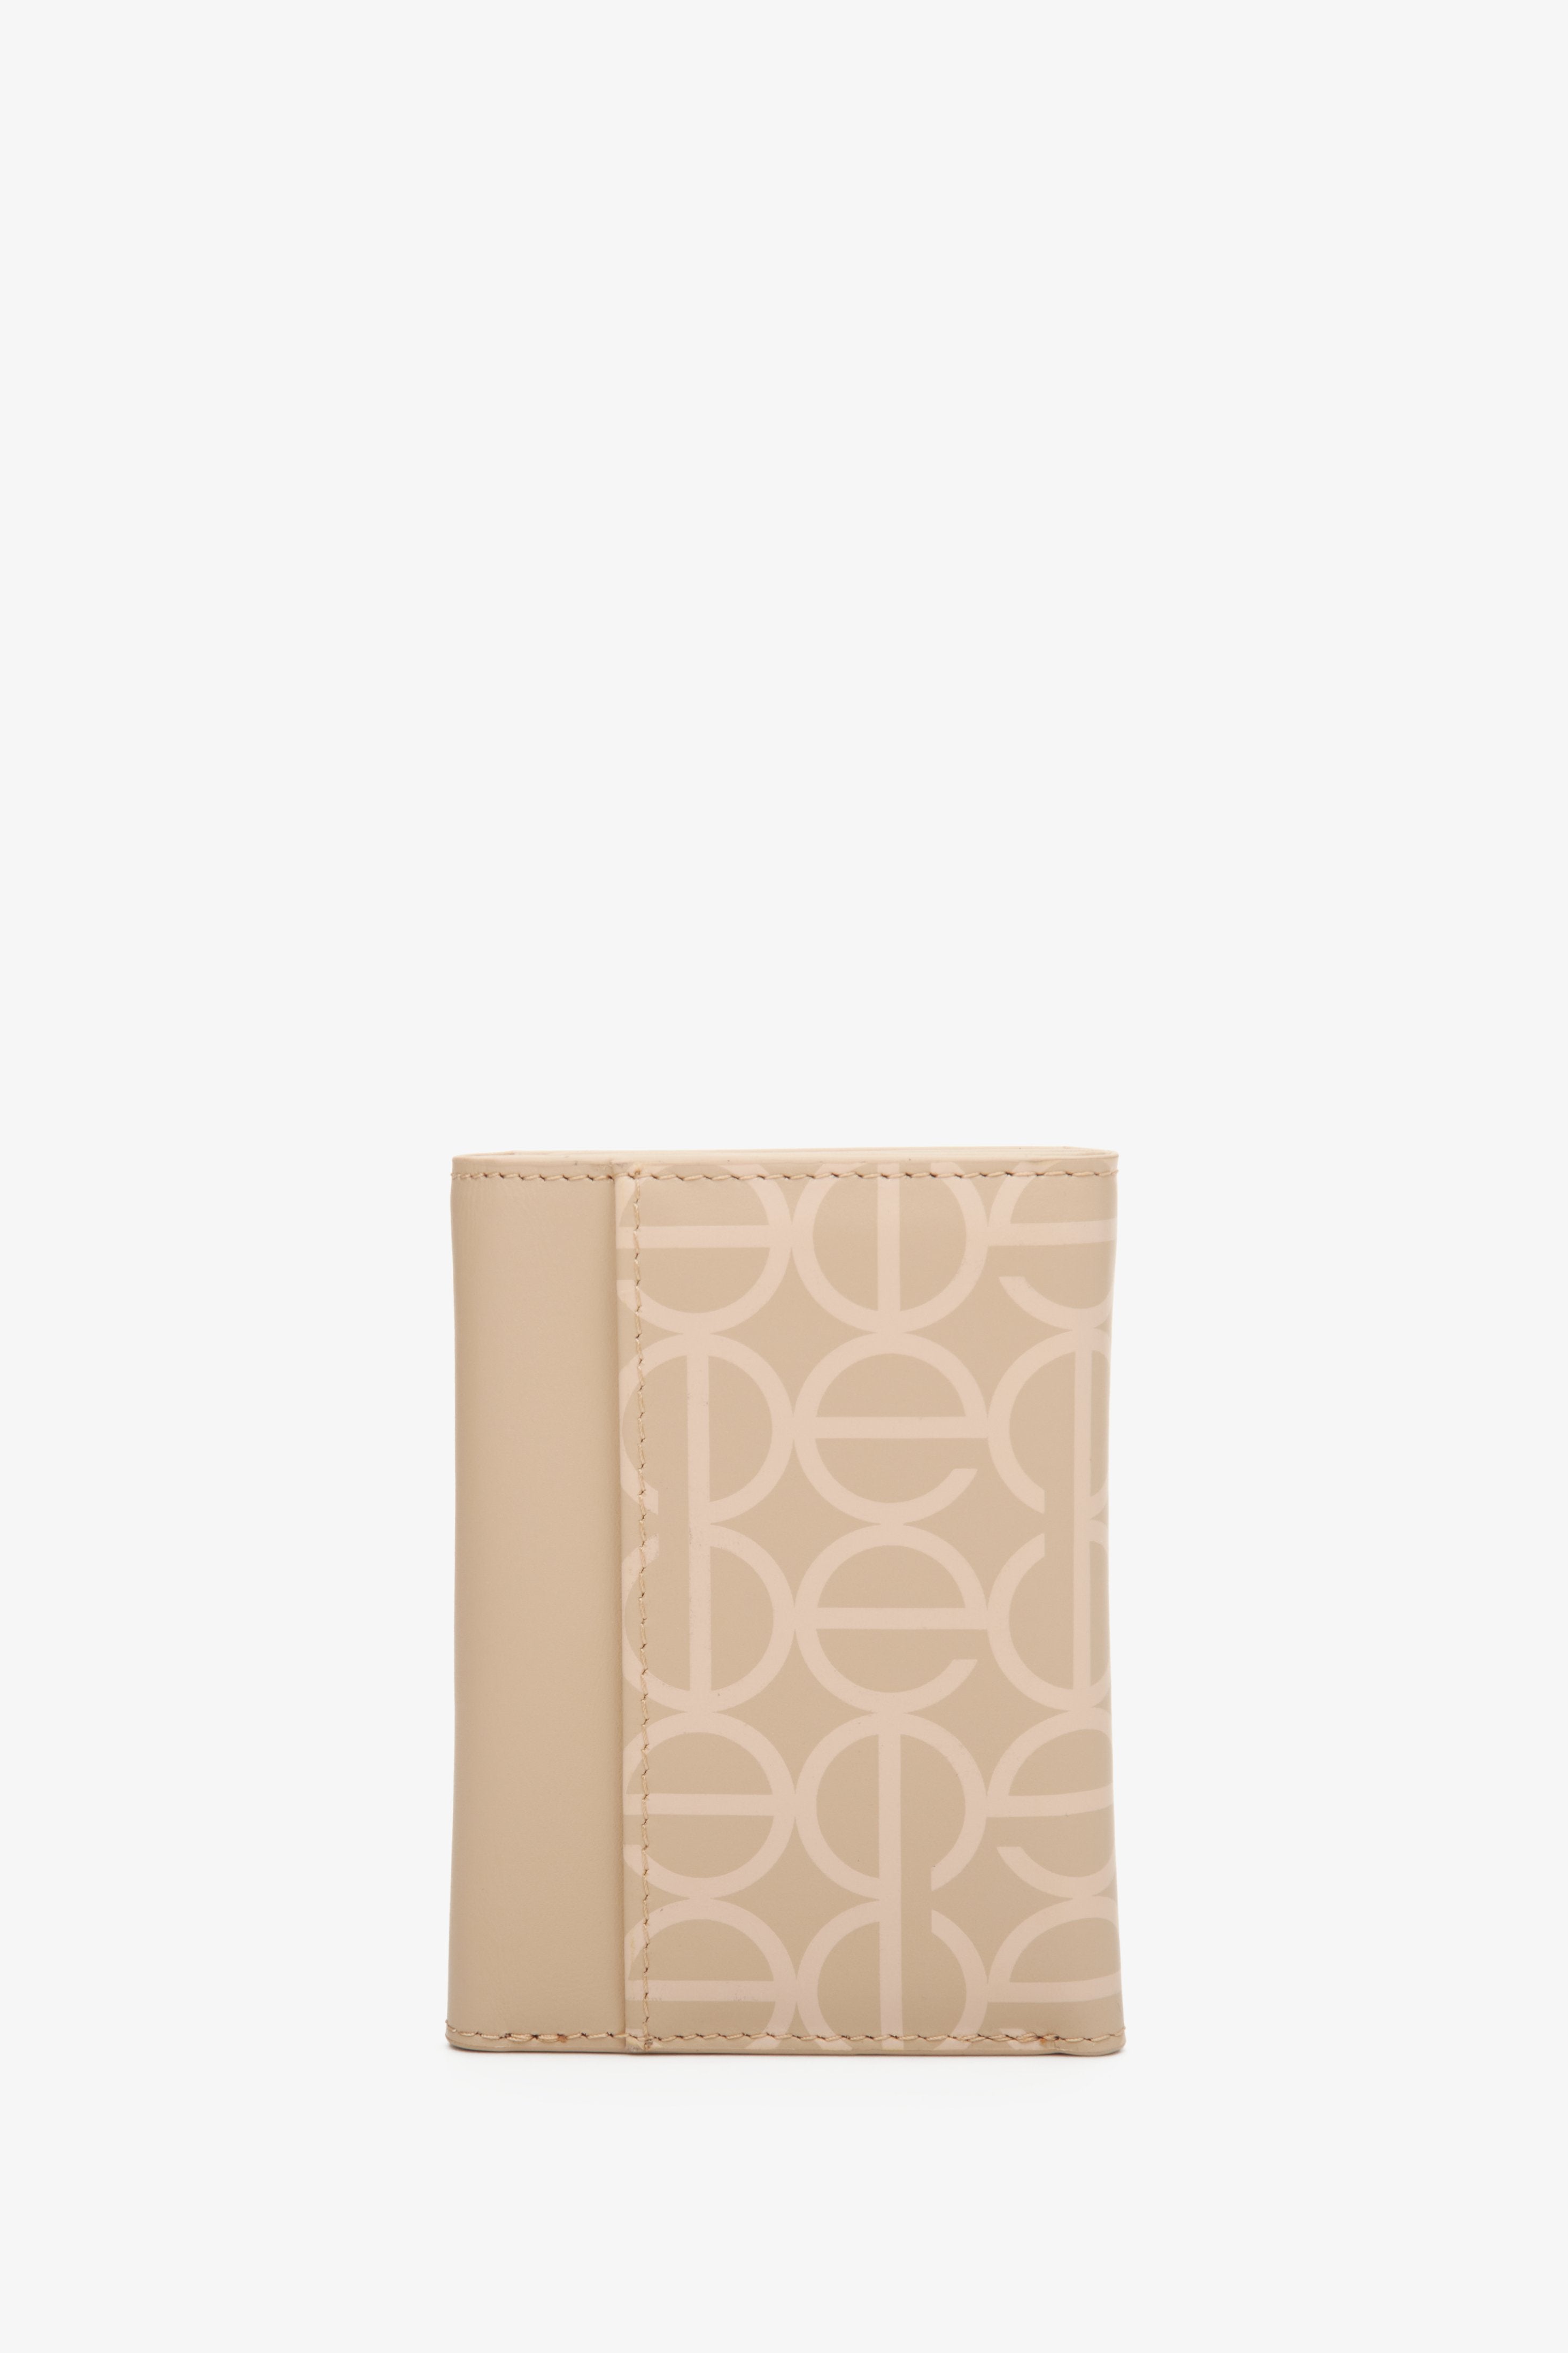 Women's beige wallet by Estro with golden accents - reverse side.